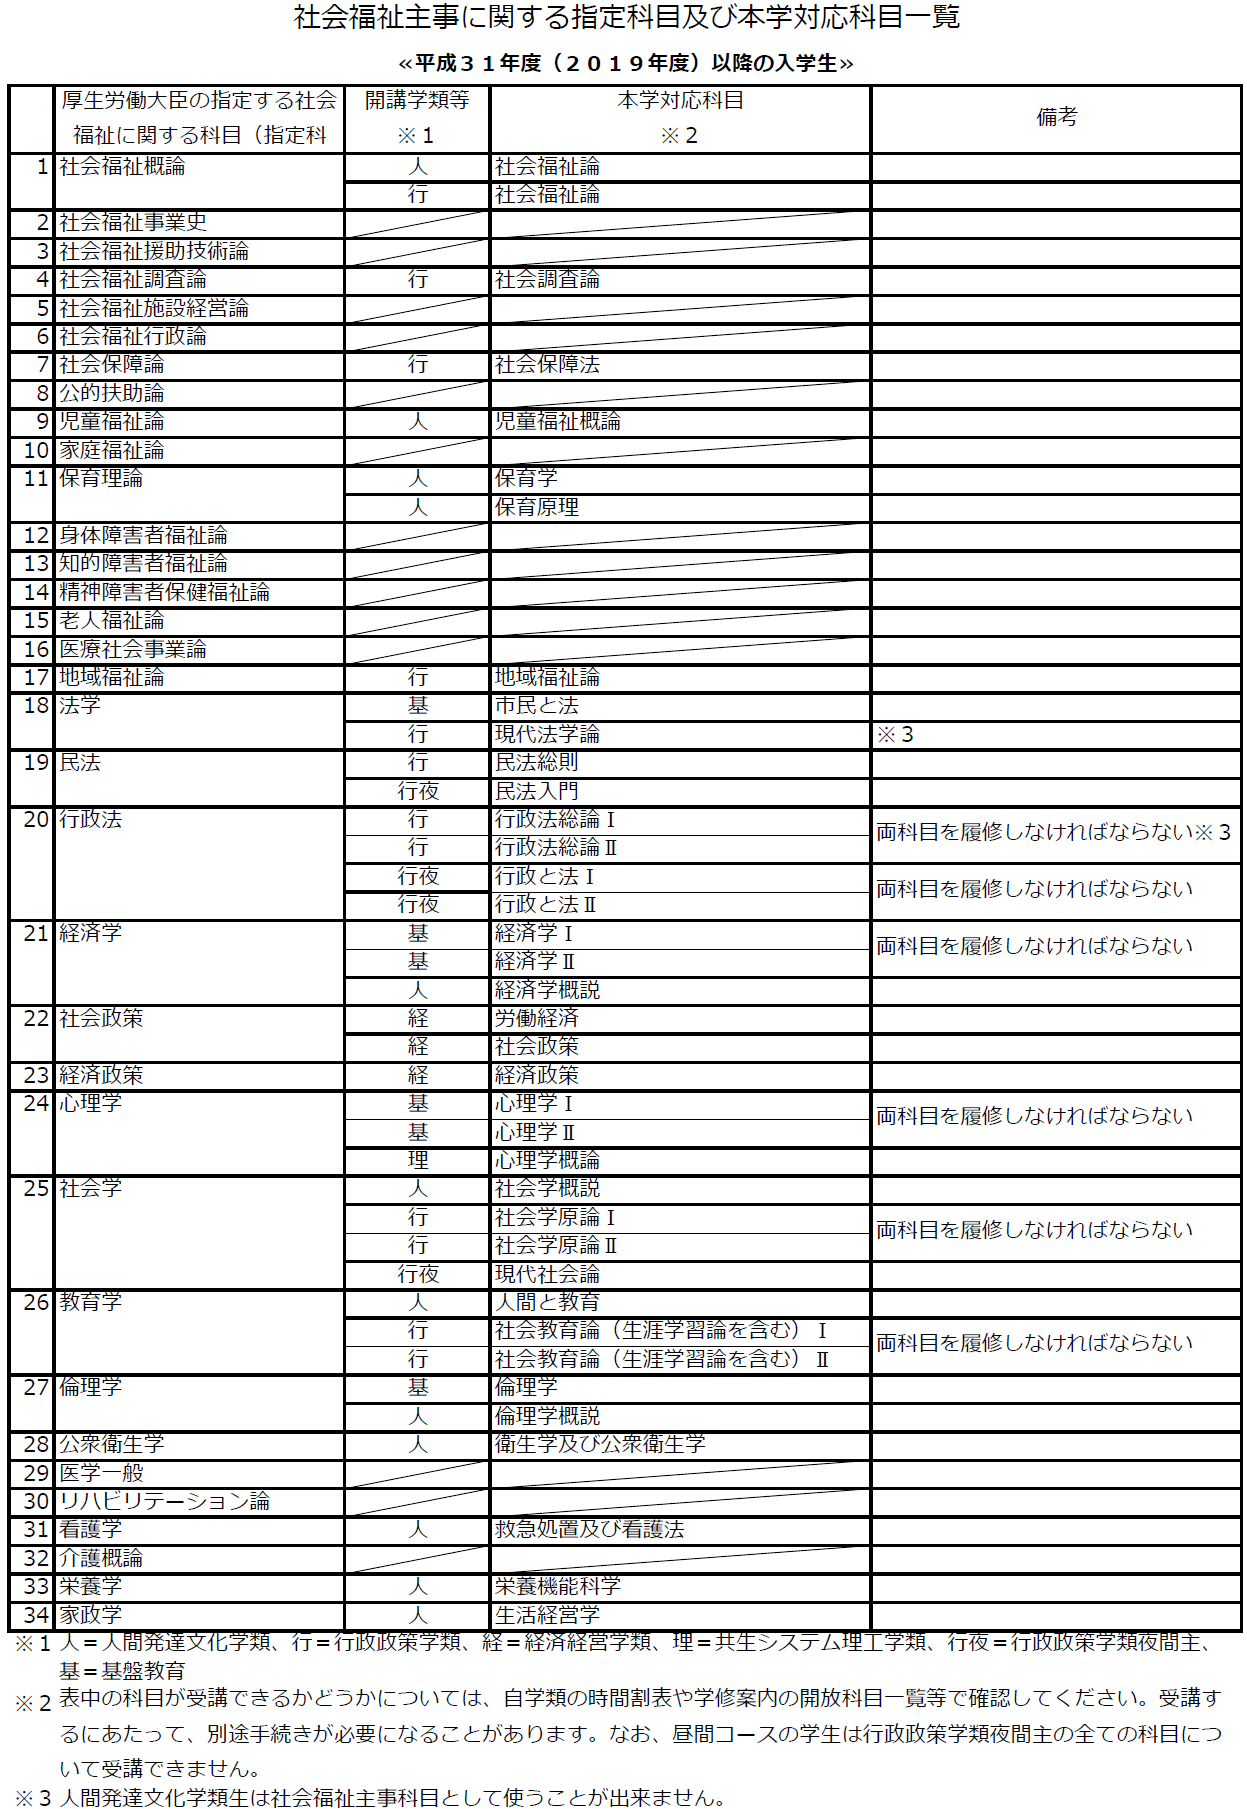 http://kyoumu.adb.fukushima-u.ac.jp/guide/2020/hdc/Files/2020/03/%E7%A4%BE%E4%BC%9A%E7%A6%8F%E7%A5%89%E4%B8%BB%E4%BA%8B200330.png